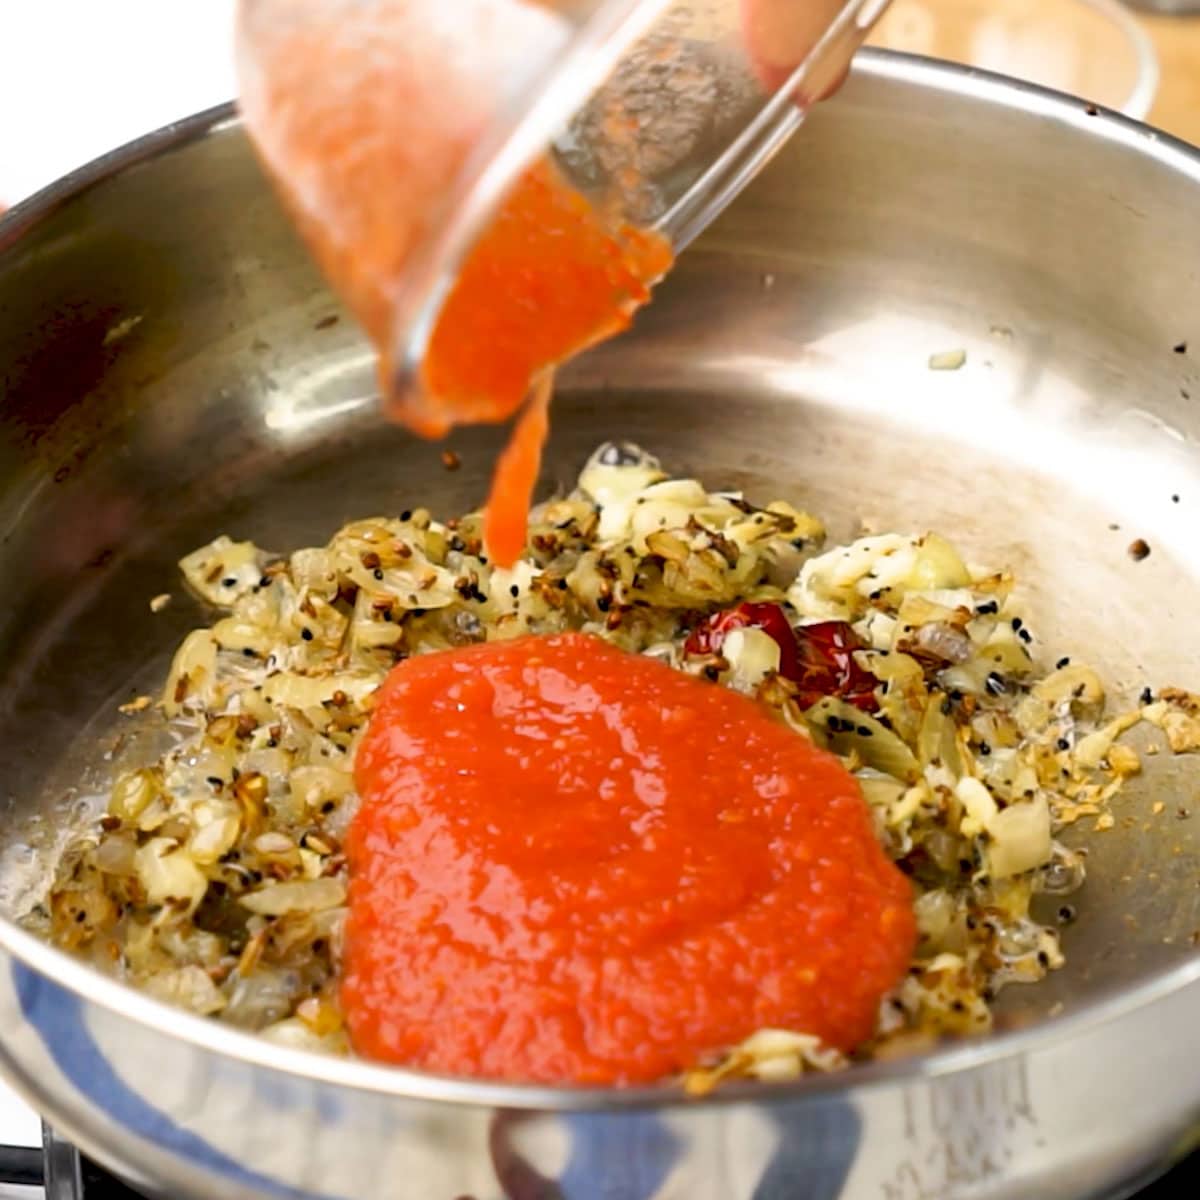 Adding Tomato Puree to the fry pan